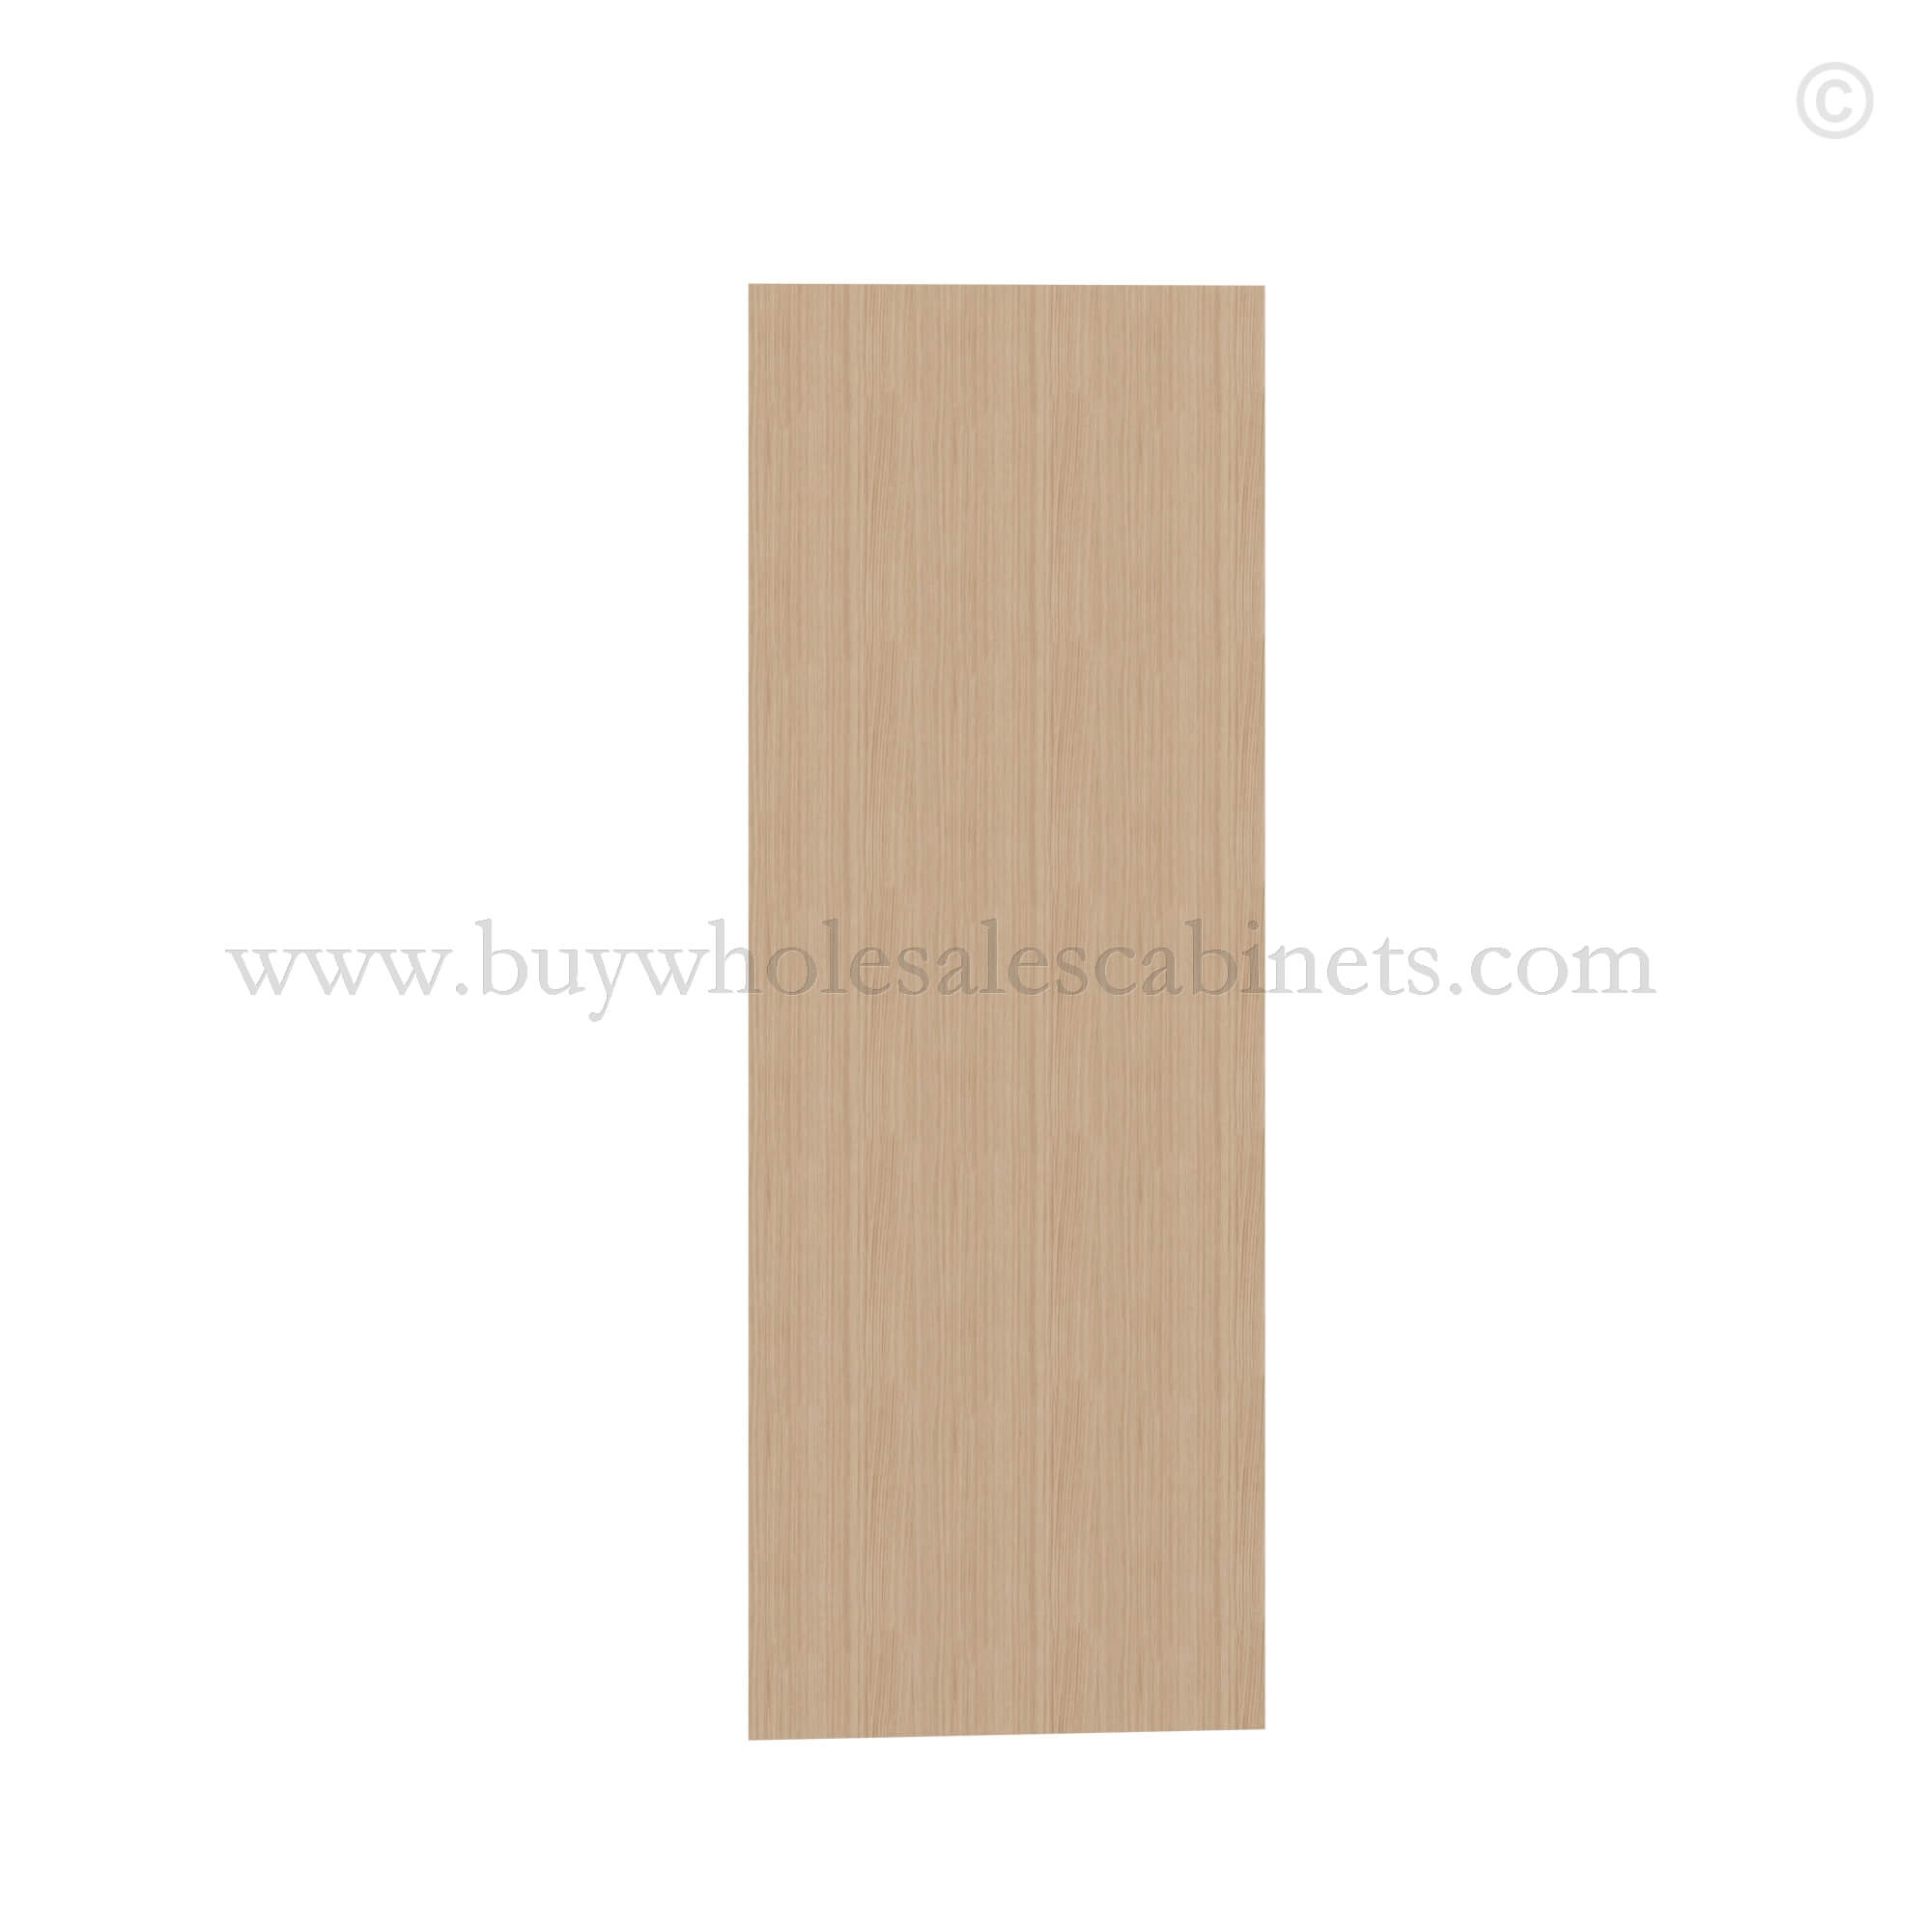 Slim Oak Shaker Wall Skin Panel, rta cabinets, wholesale cabinets